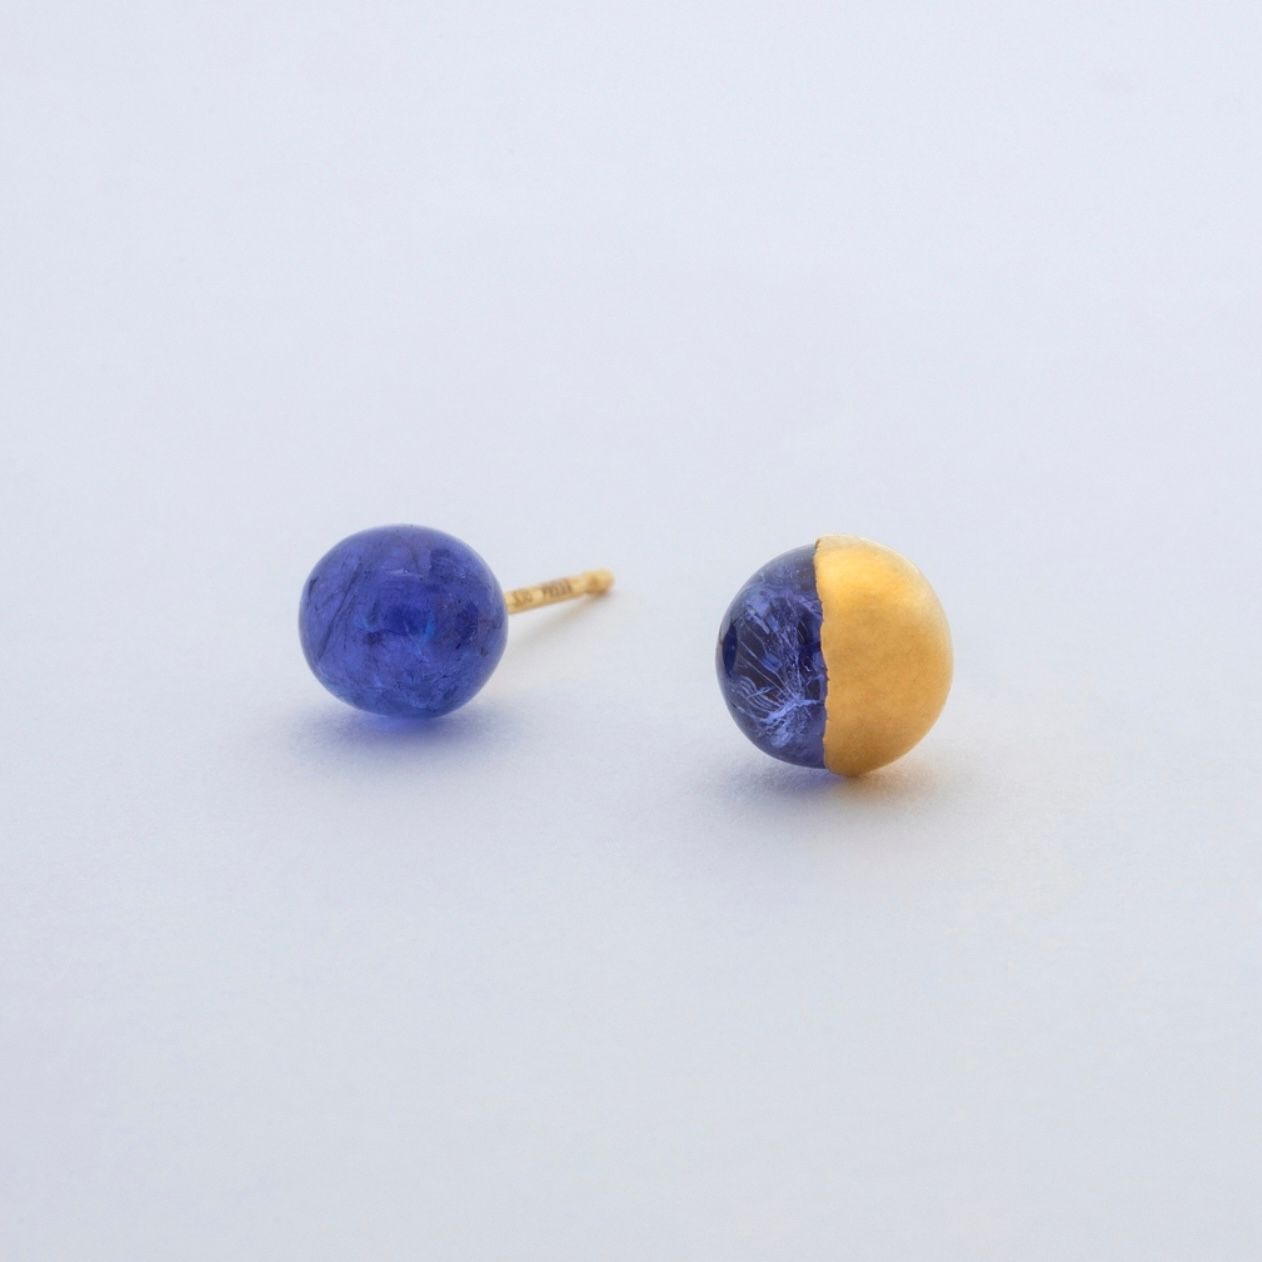 PREEK - 【お取り寄せ注文可能】Rough Stone Blue Zoisite Earrings(両